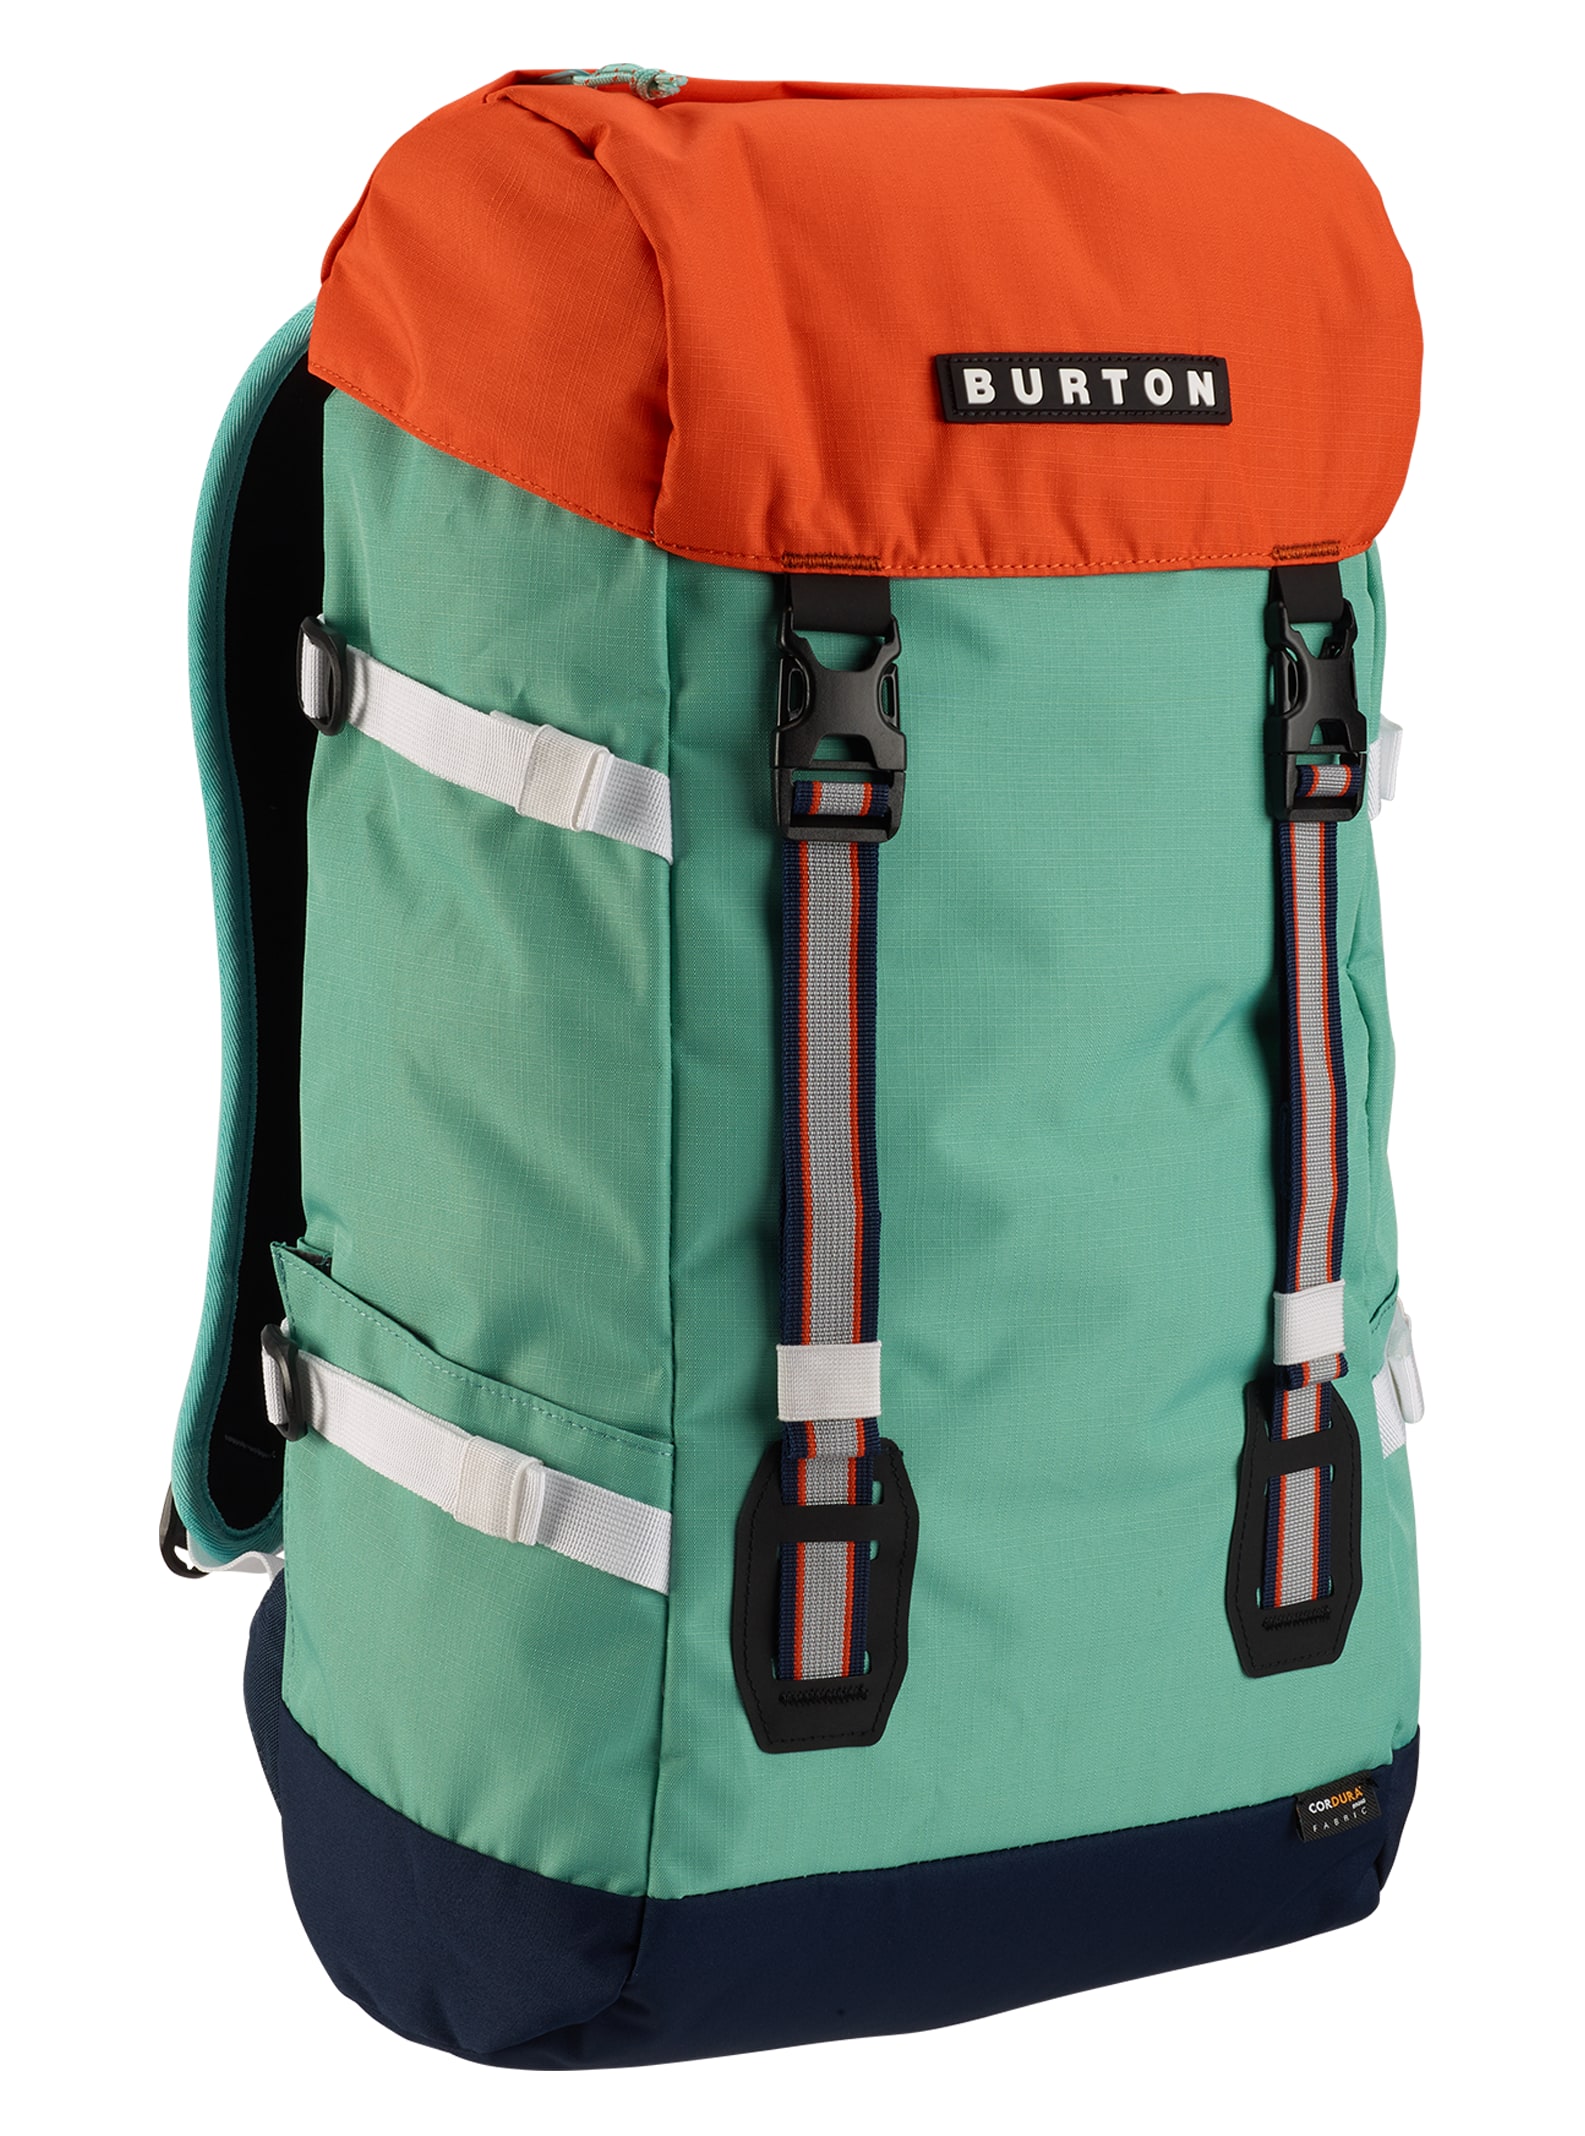 Burton Tinder 2.0 30L Backpack | Burton.com Spring 2020 SI